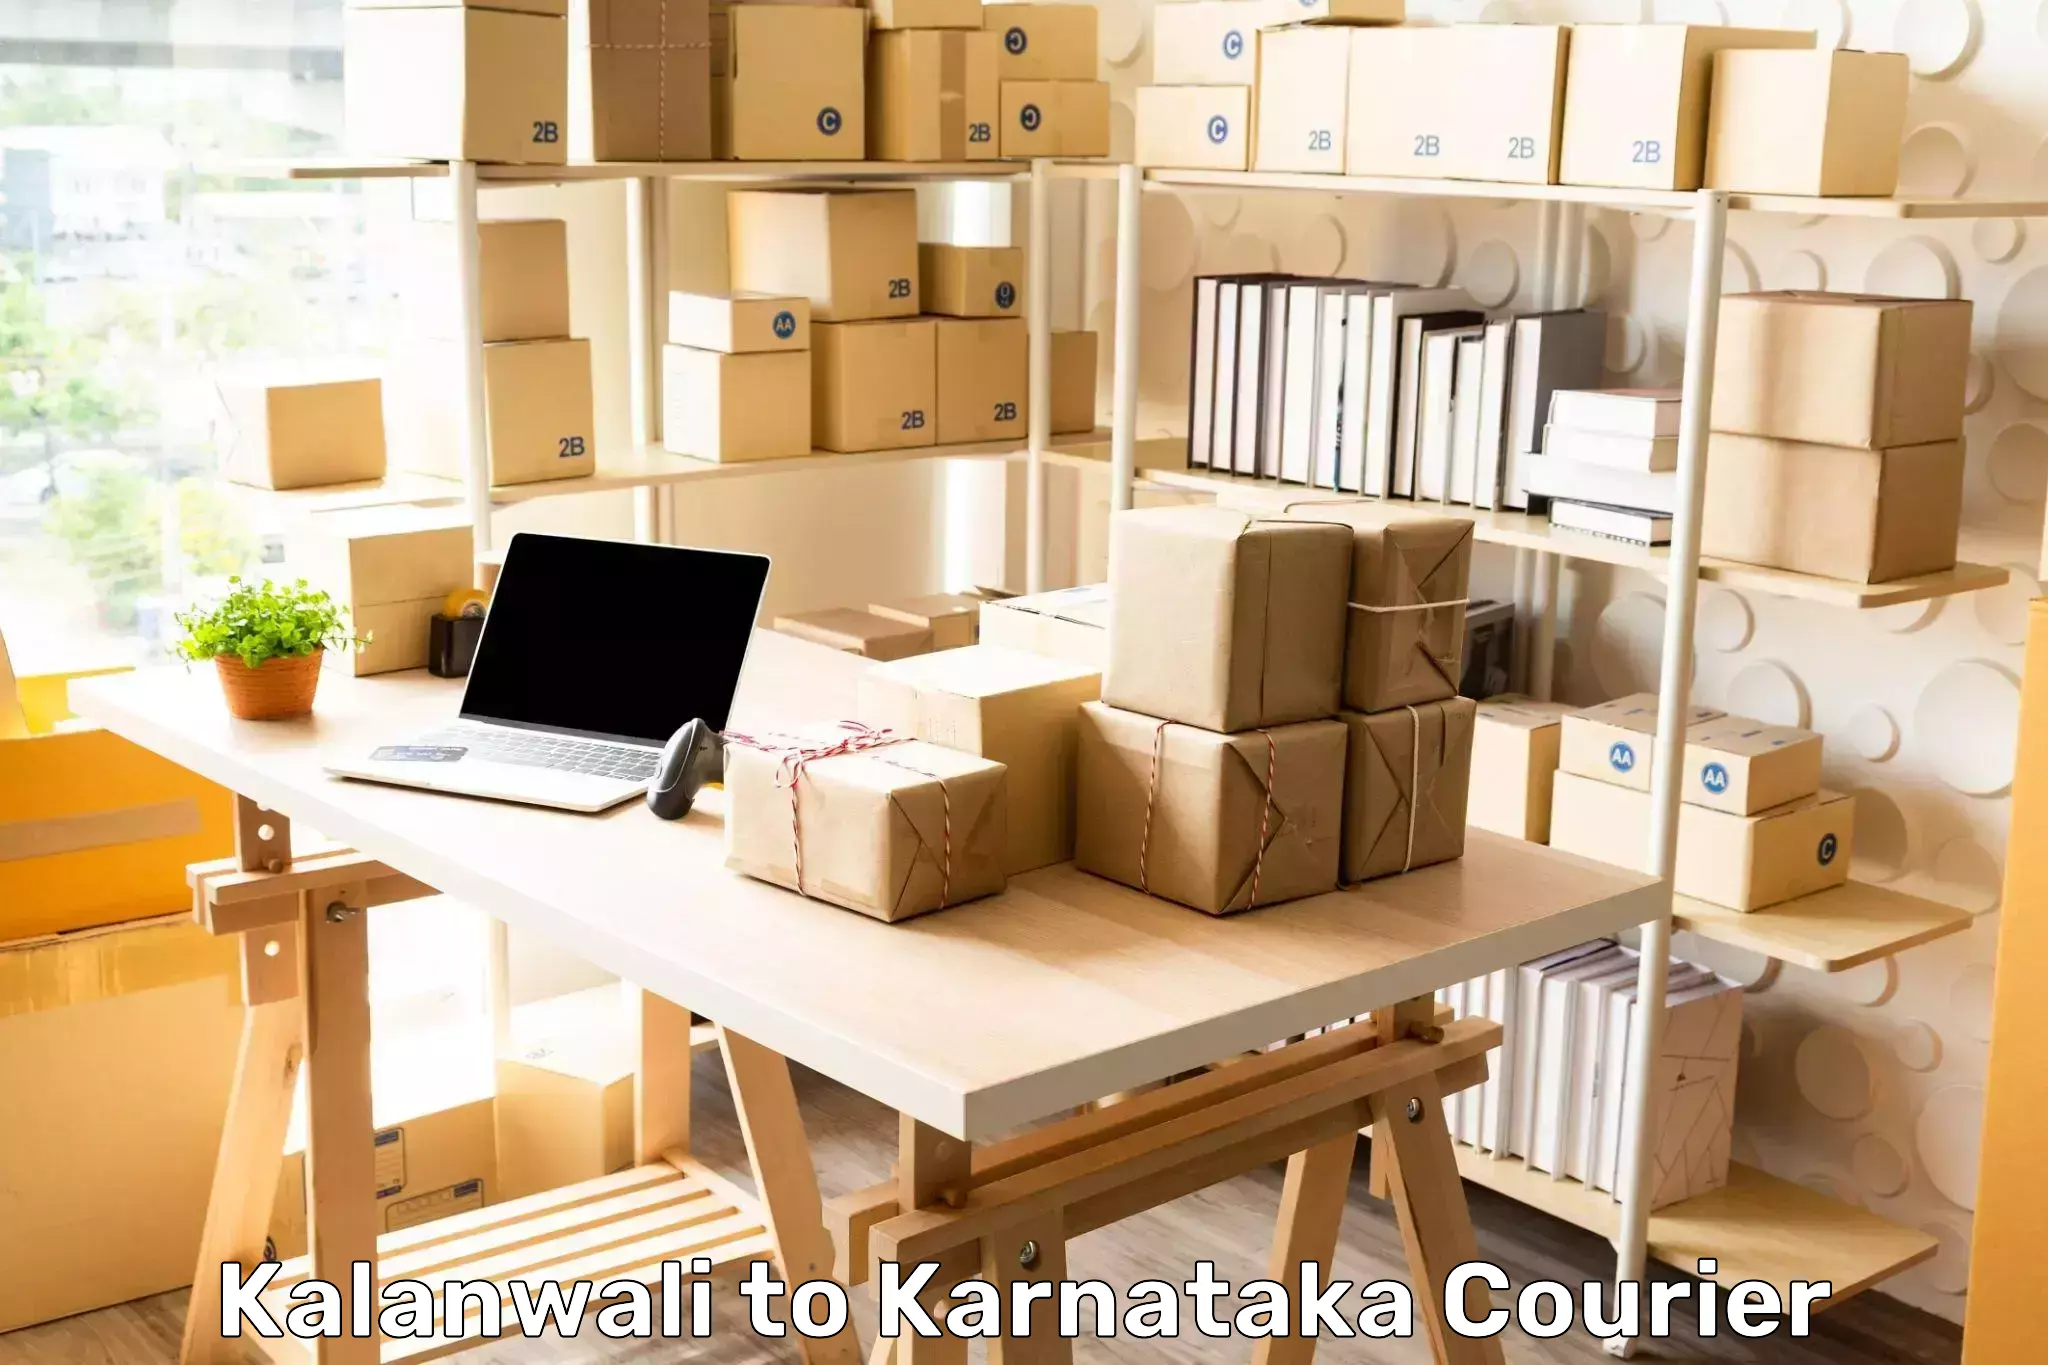 Diverse delivery methods Kalanwali to Karnataka